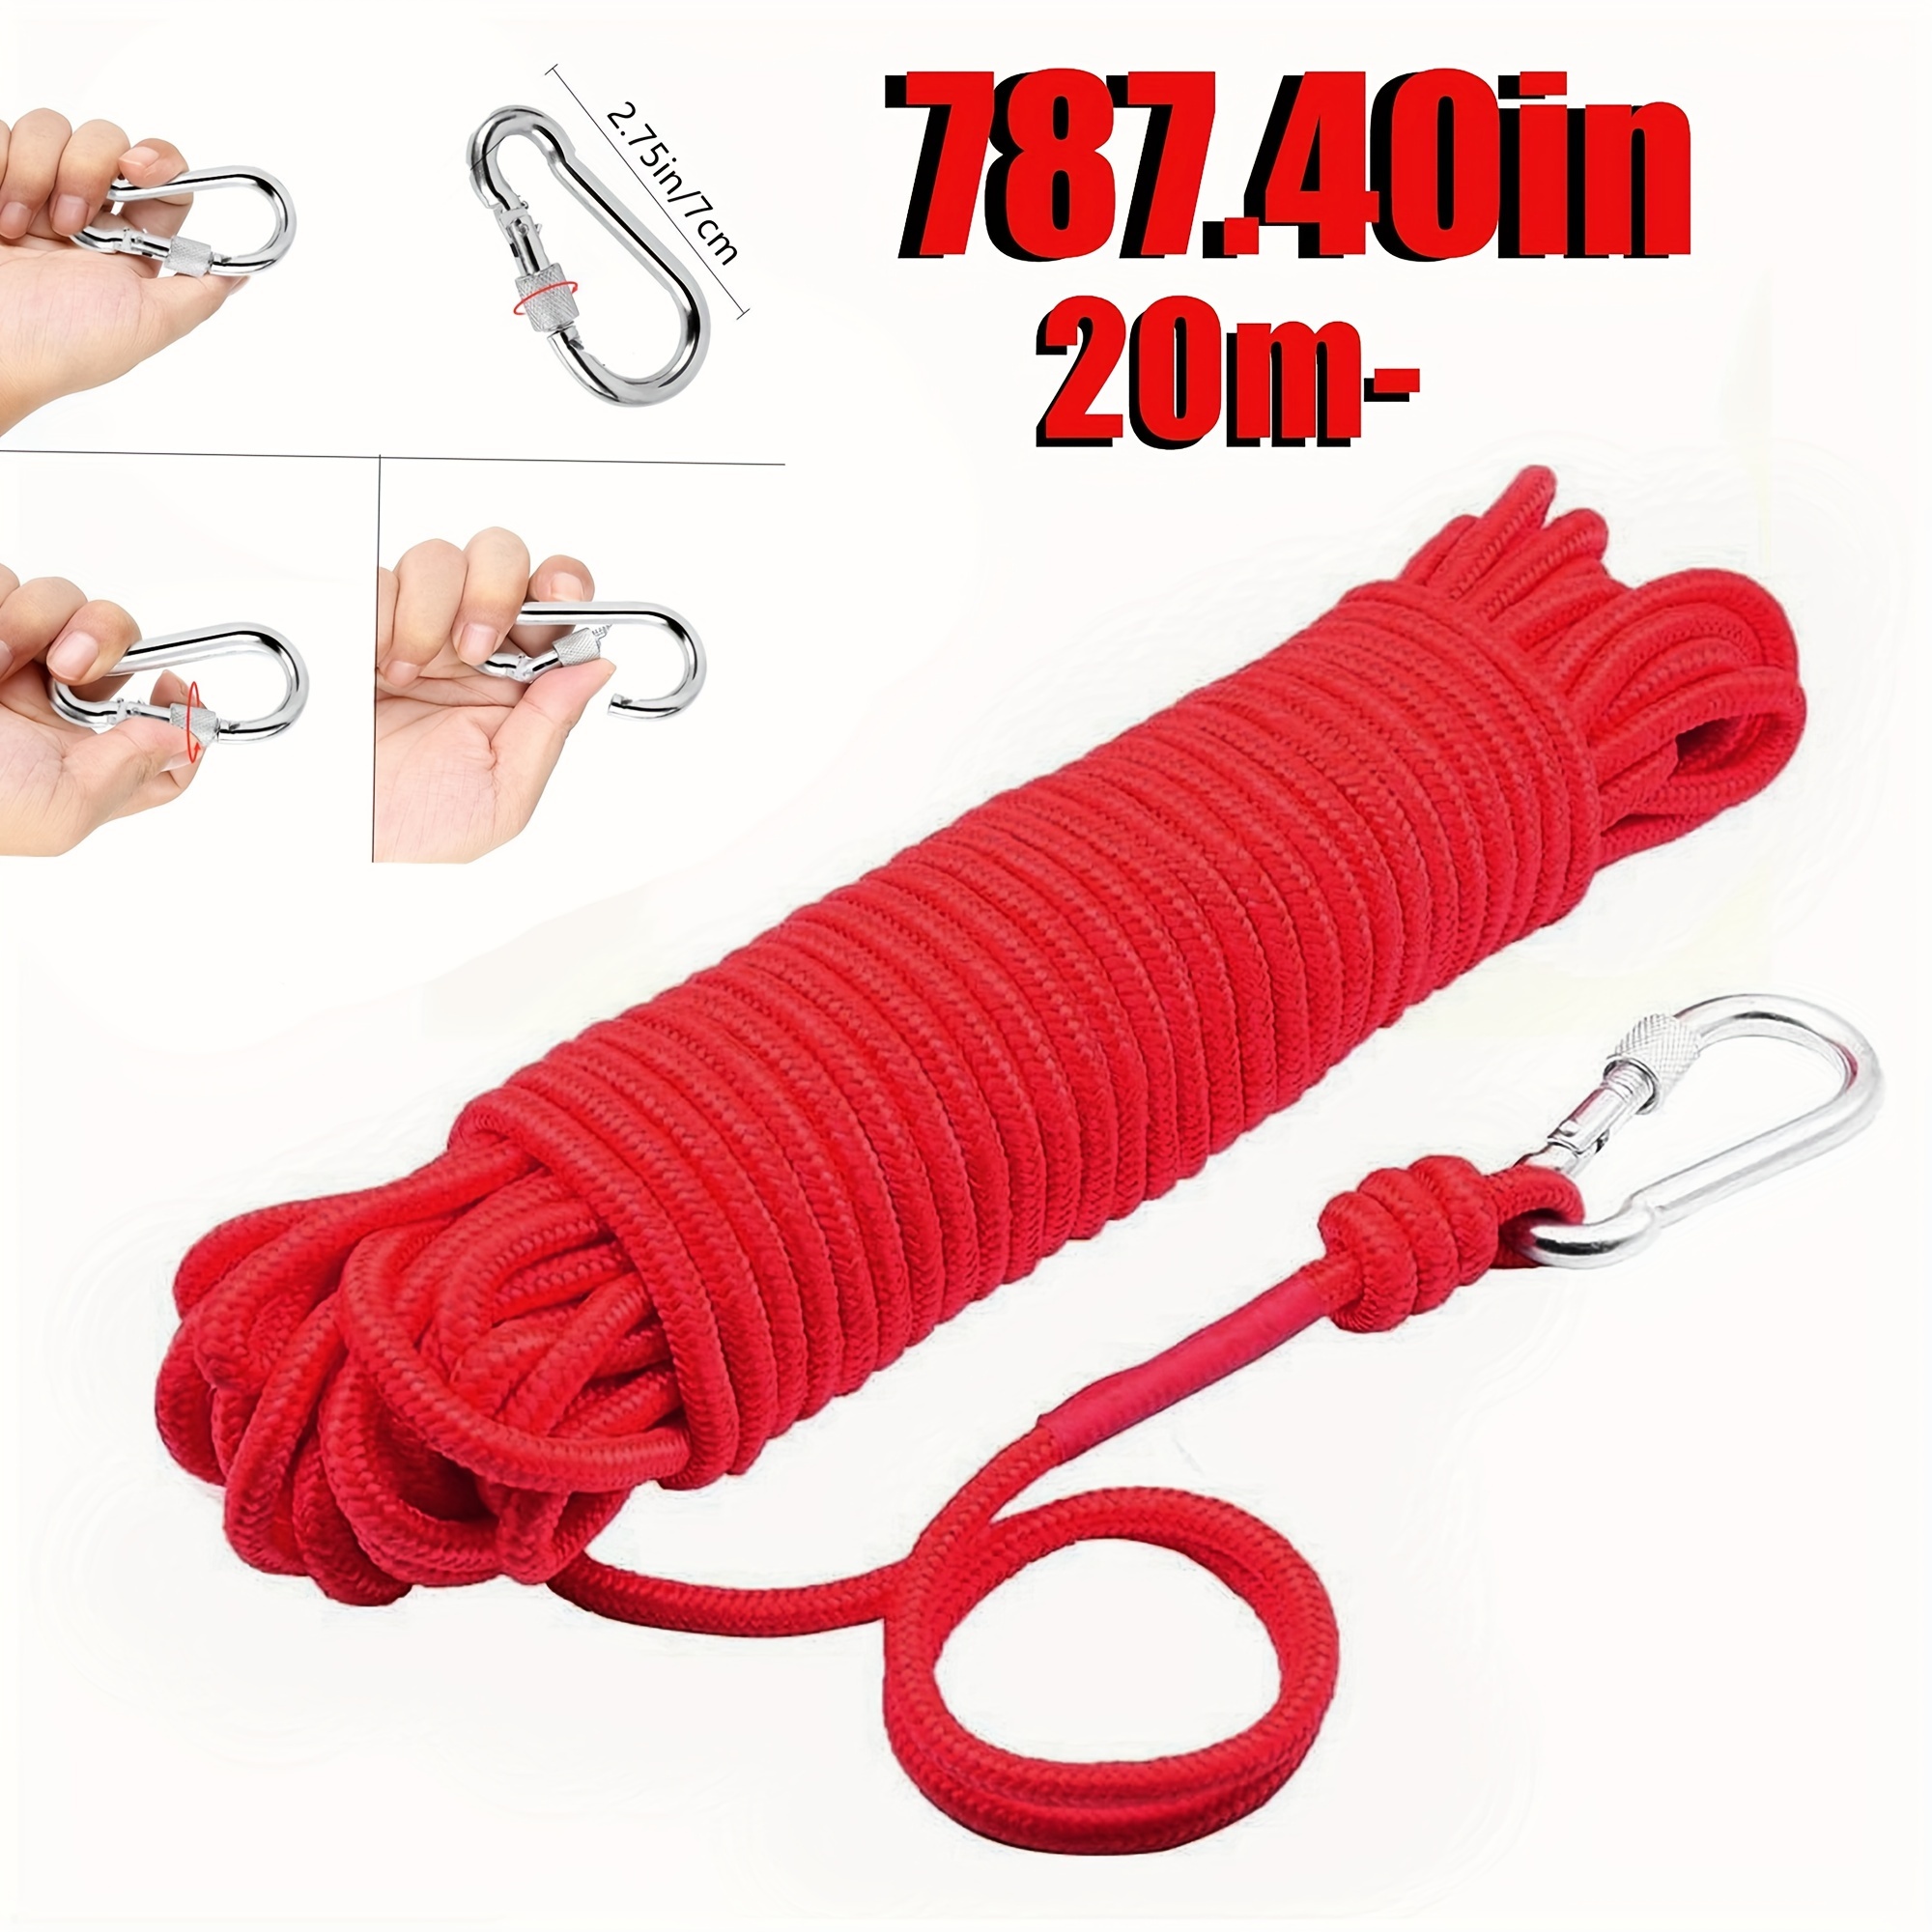 20m Red Magnetic Fishing Rope Braided Nylon Rope Carabiner